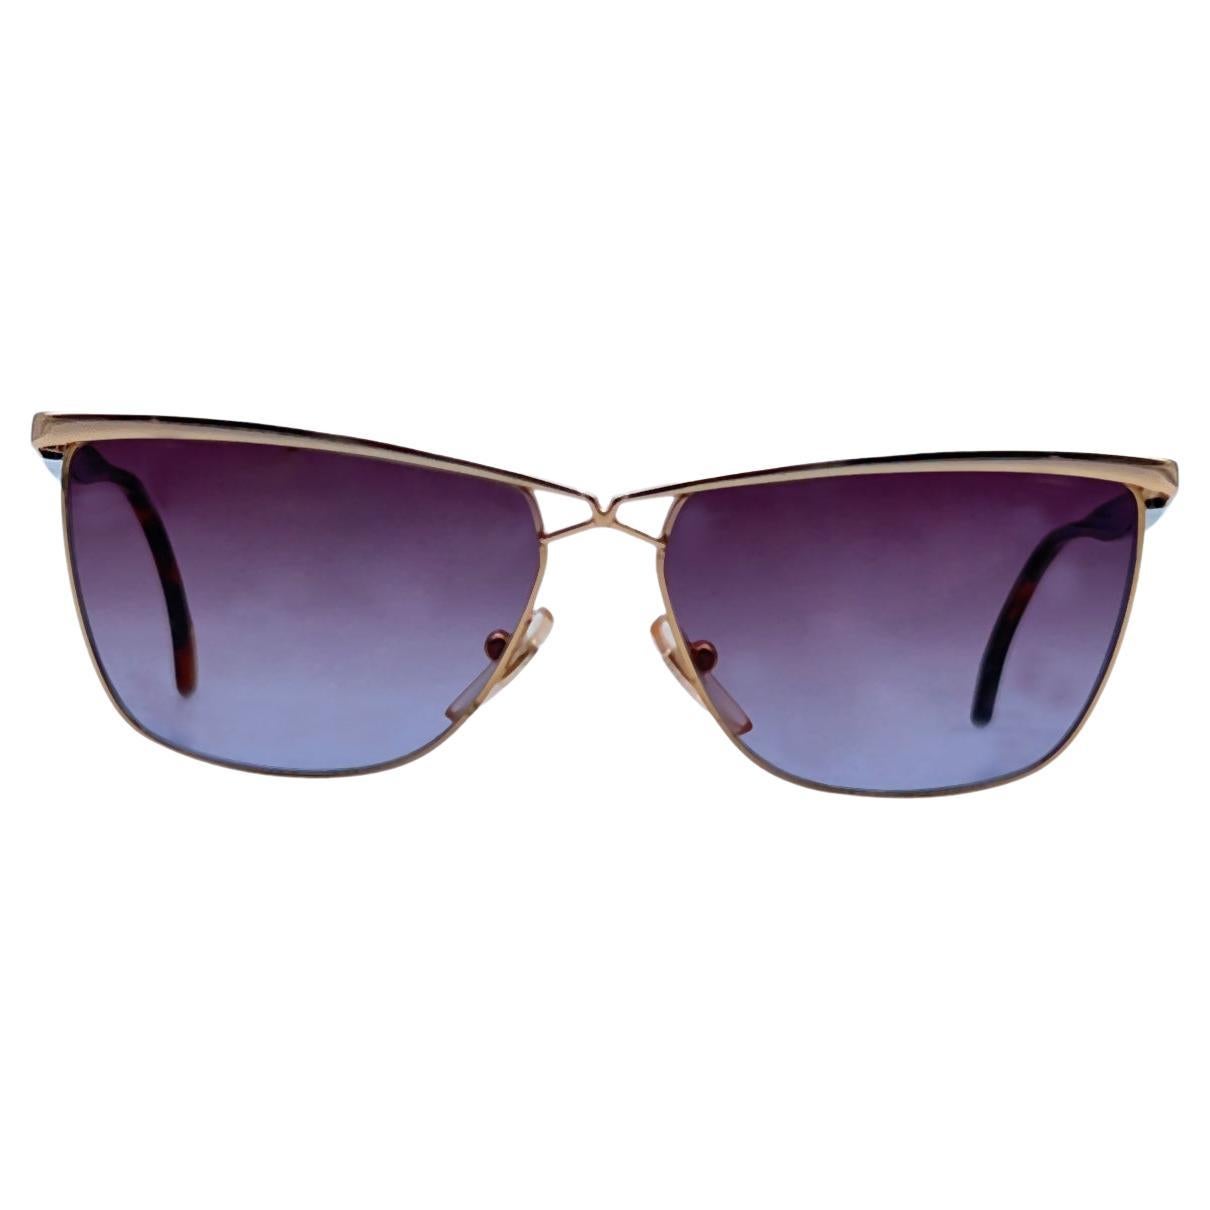 Gianni Versace Vintage Mint Gold Metal Sunglasses V 30 58/12 140mm